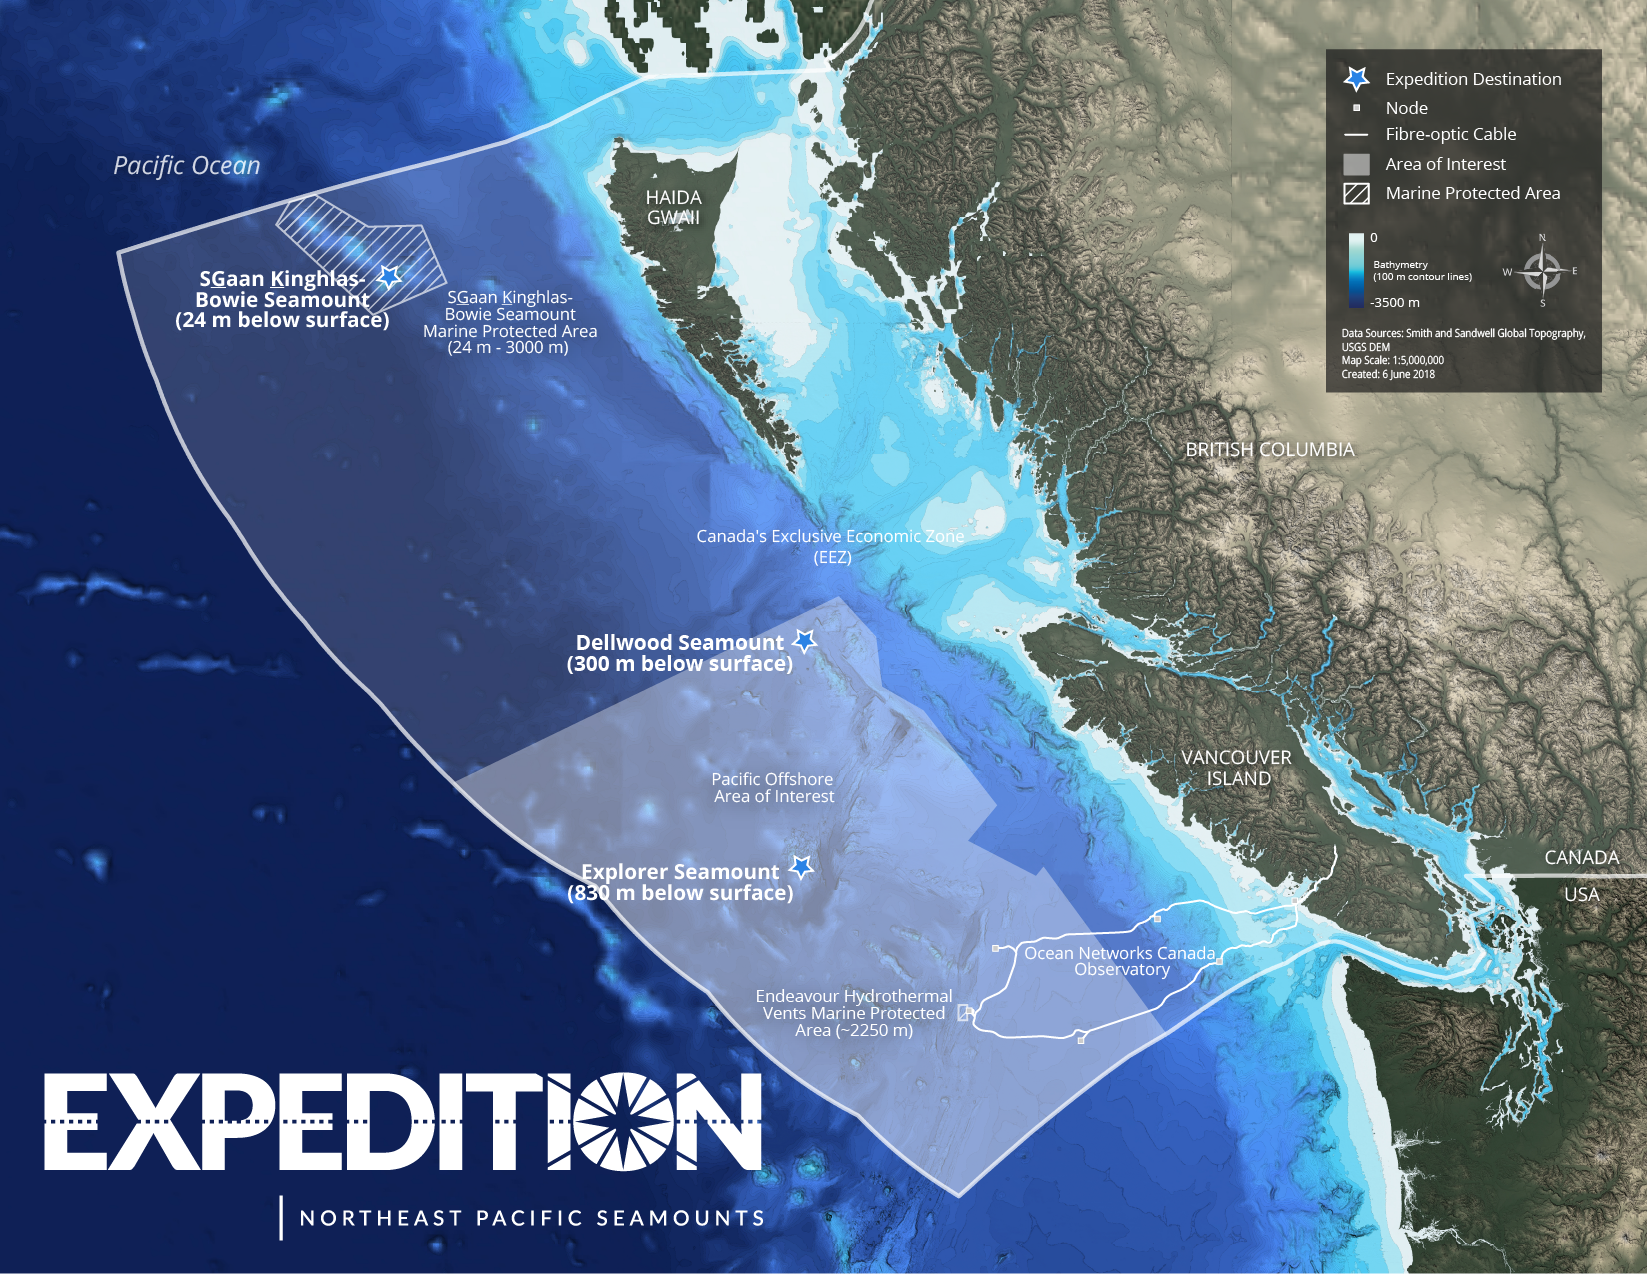 Surveying Three Unexplored Northeast Pacific Seamounts